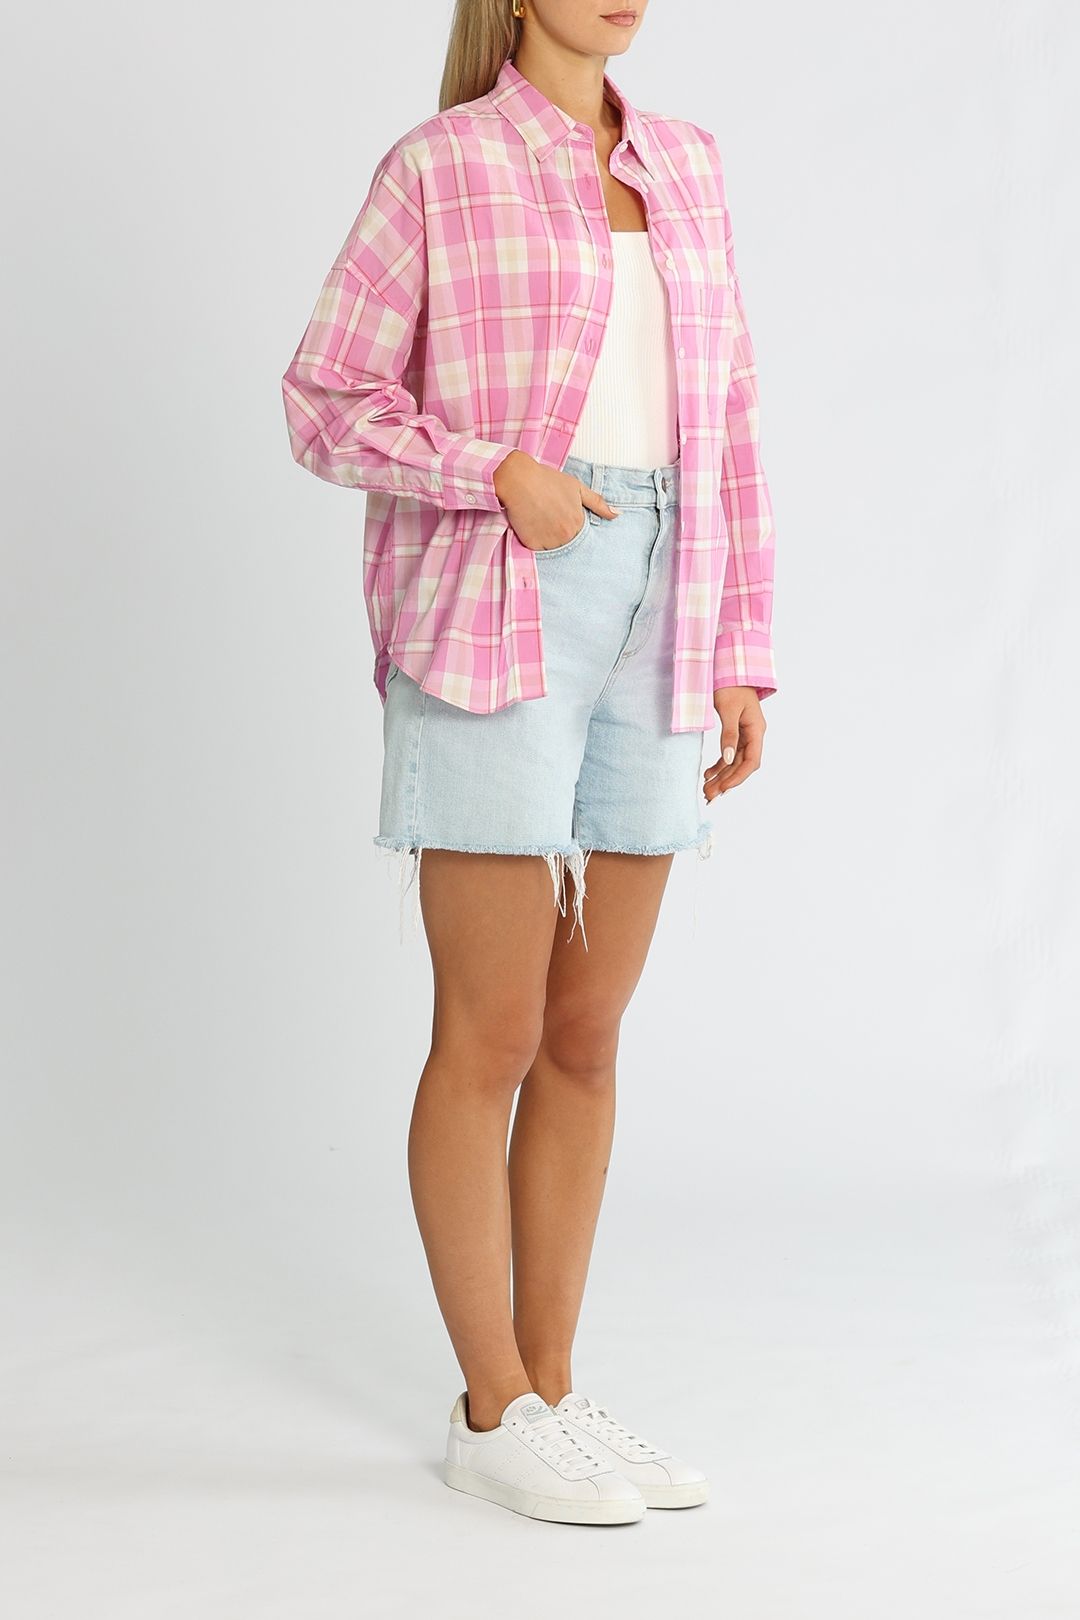 LMND Chiara Shirt Pink Check Long Sleeves